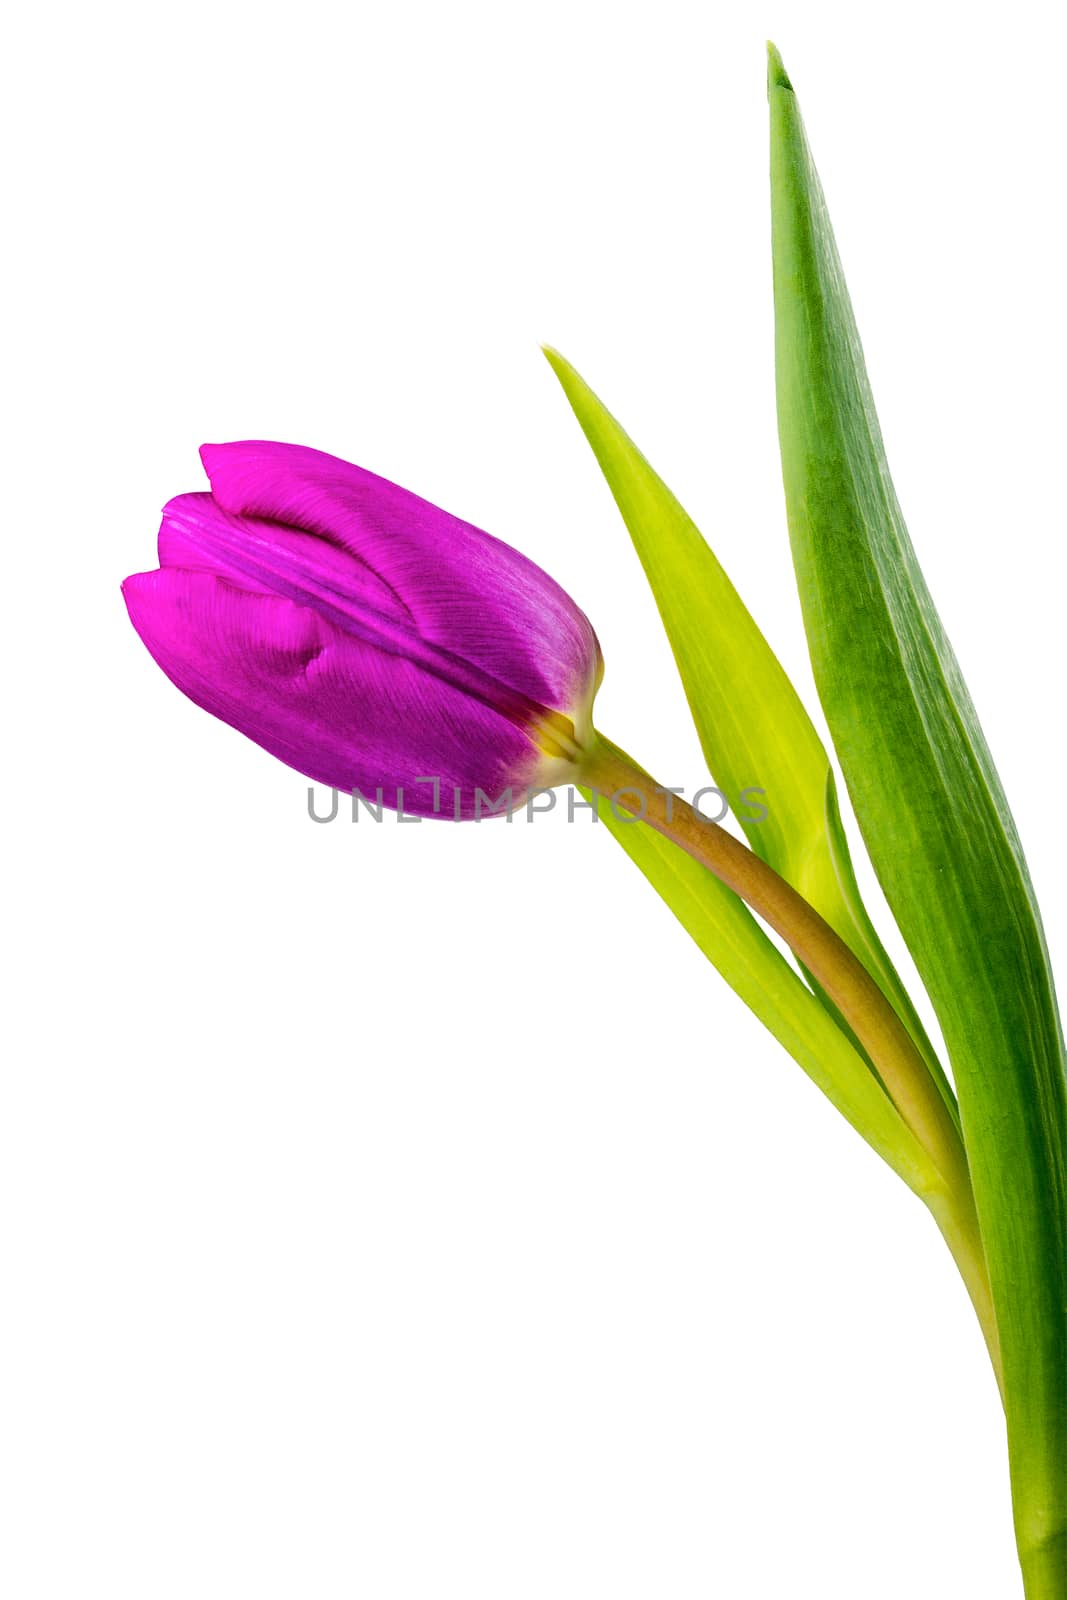 Violet tulip on a white background by neryx